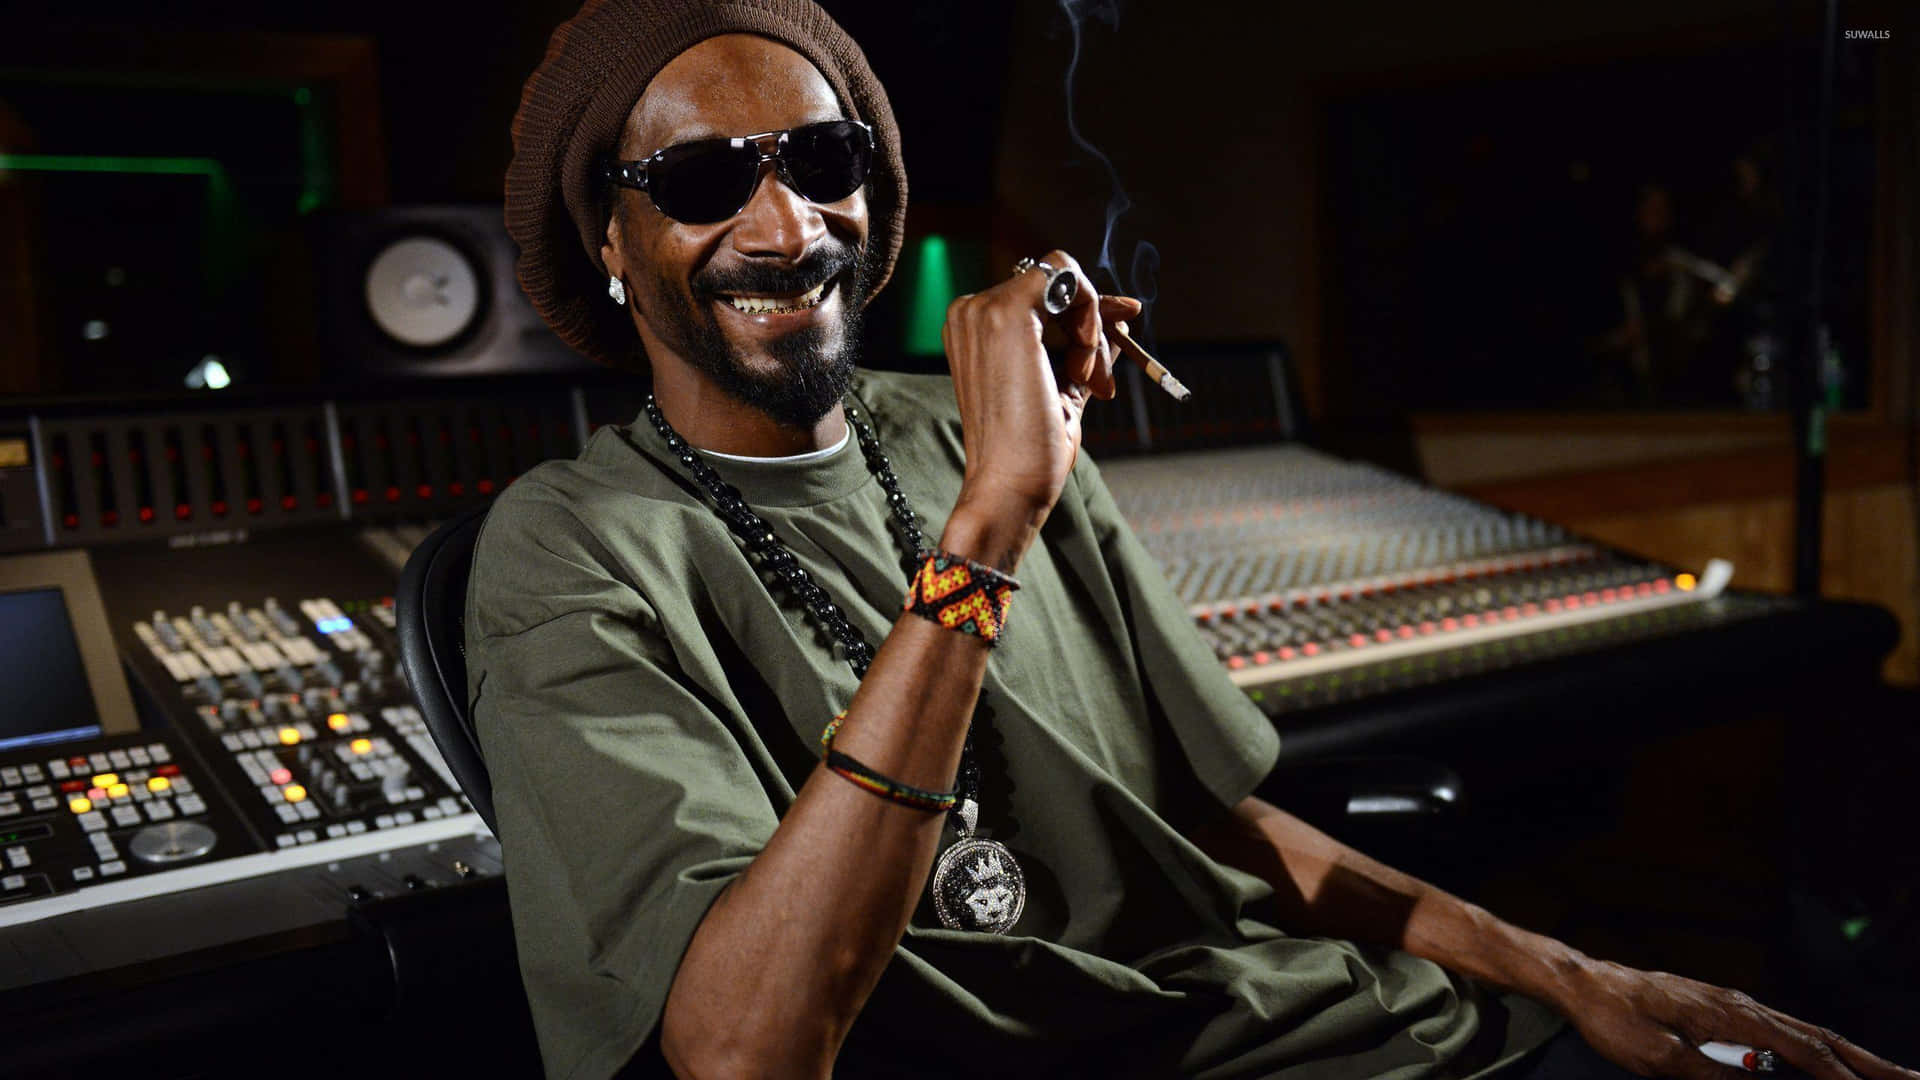 Ung Snoop Dogg 2560 X 1440 Wallpaper